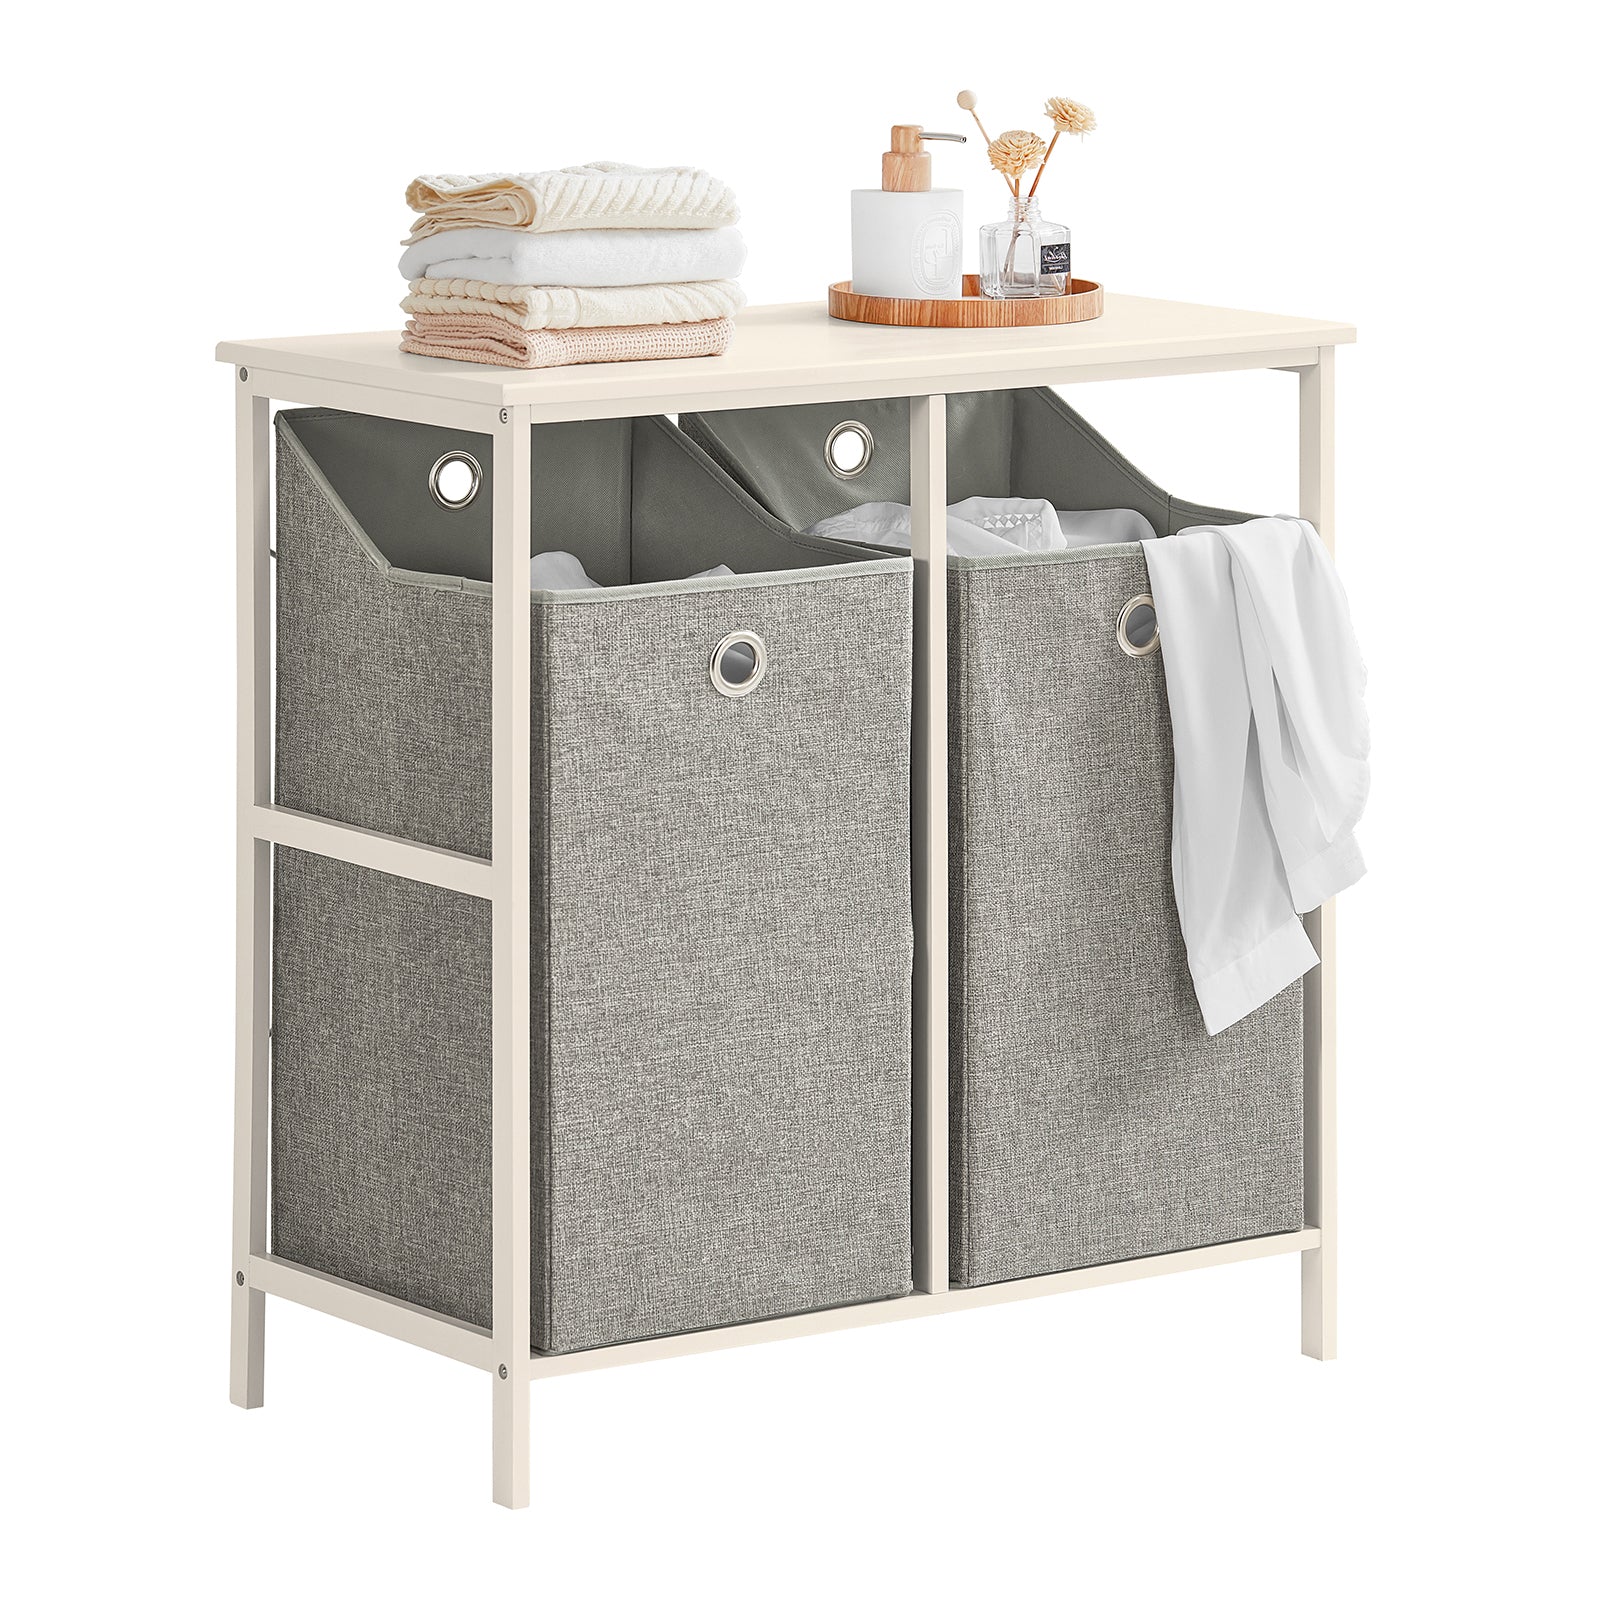 SoBuy BZR57-W Laundry Cabinet Laundry Chest with 2 Removable Laundry Baskets, Bathroom Storage Shelf Rack